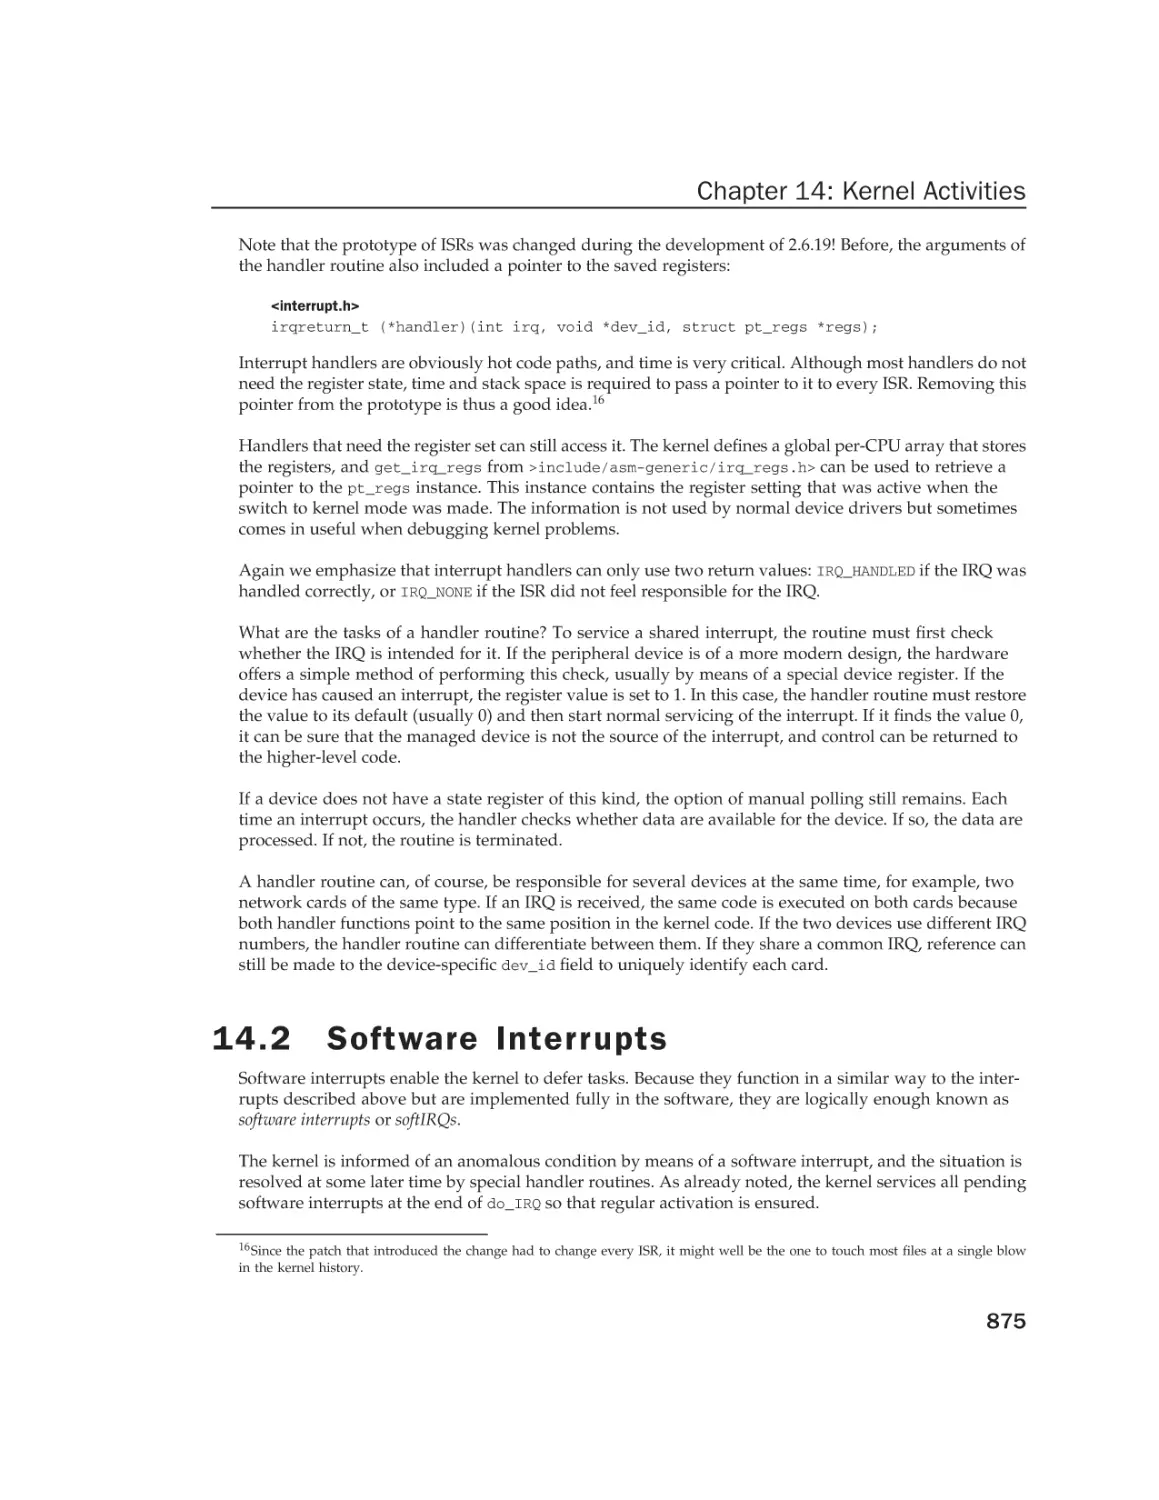 14.2 Software Interrupts